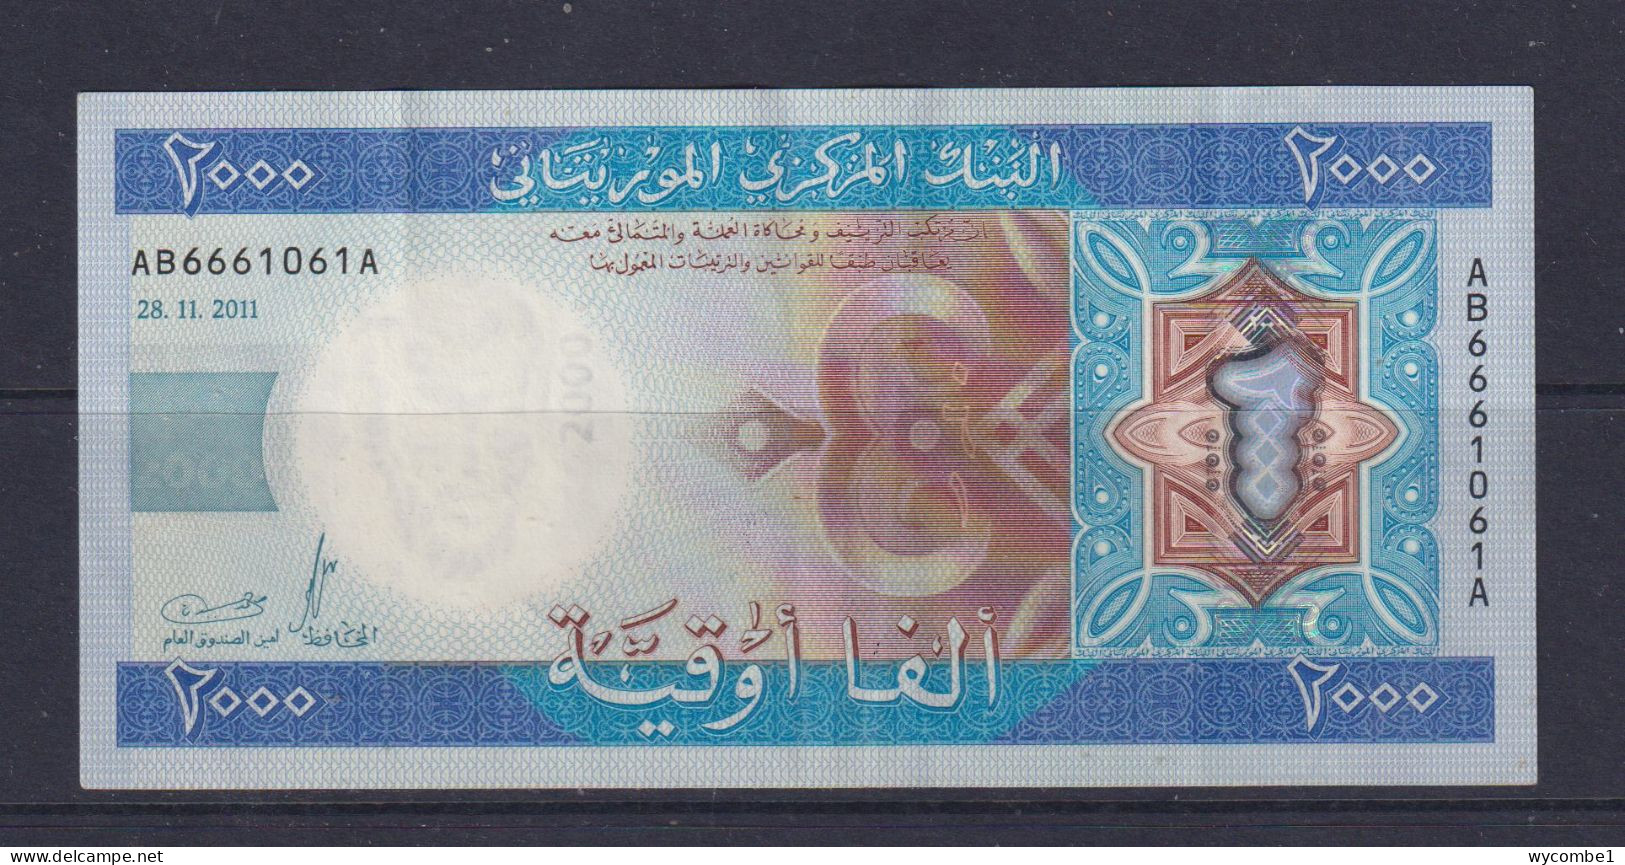 MAURITANIA - 2011 2000 Ouguiya Circulated Banknote - Mauritania